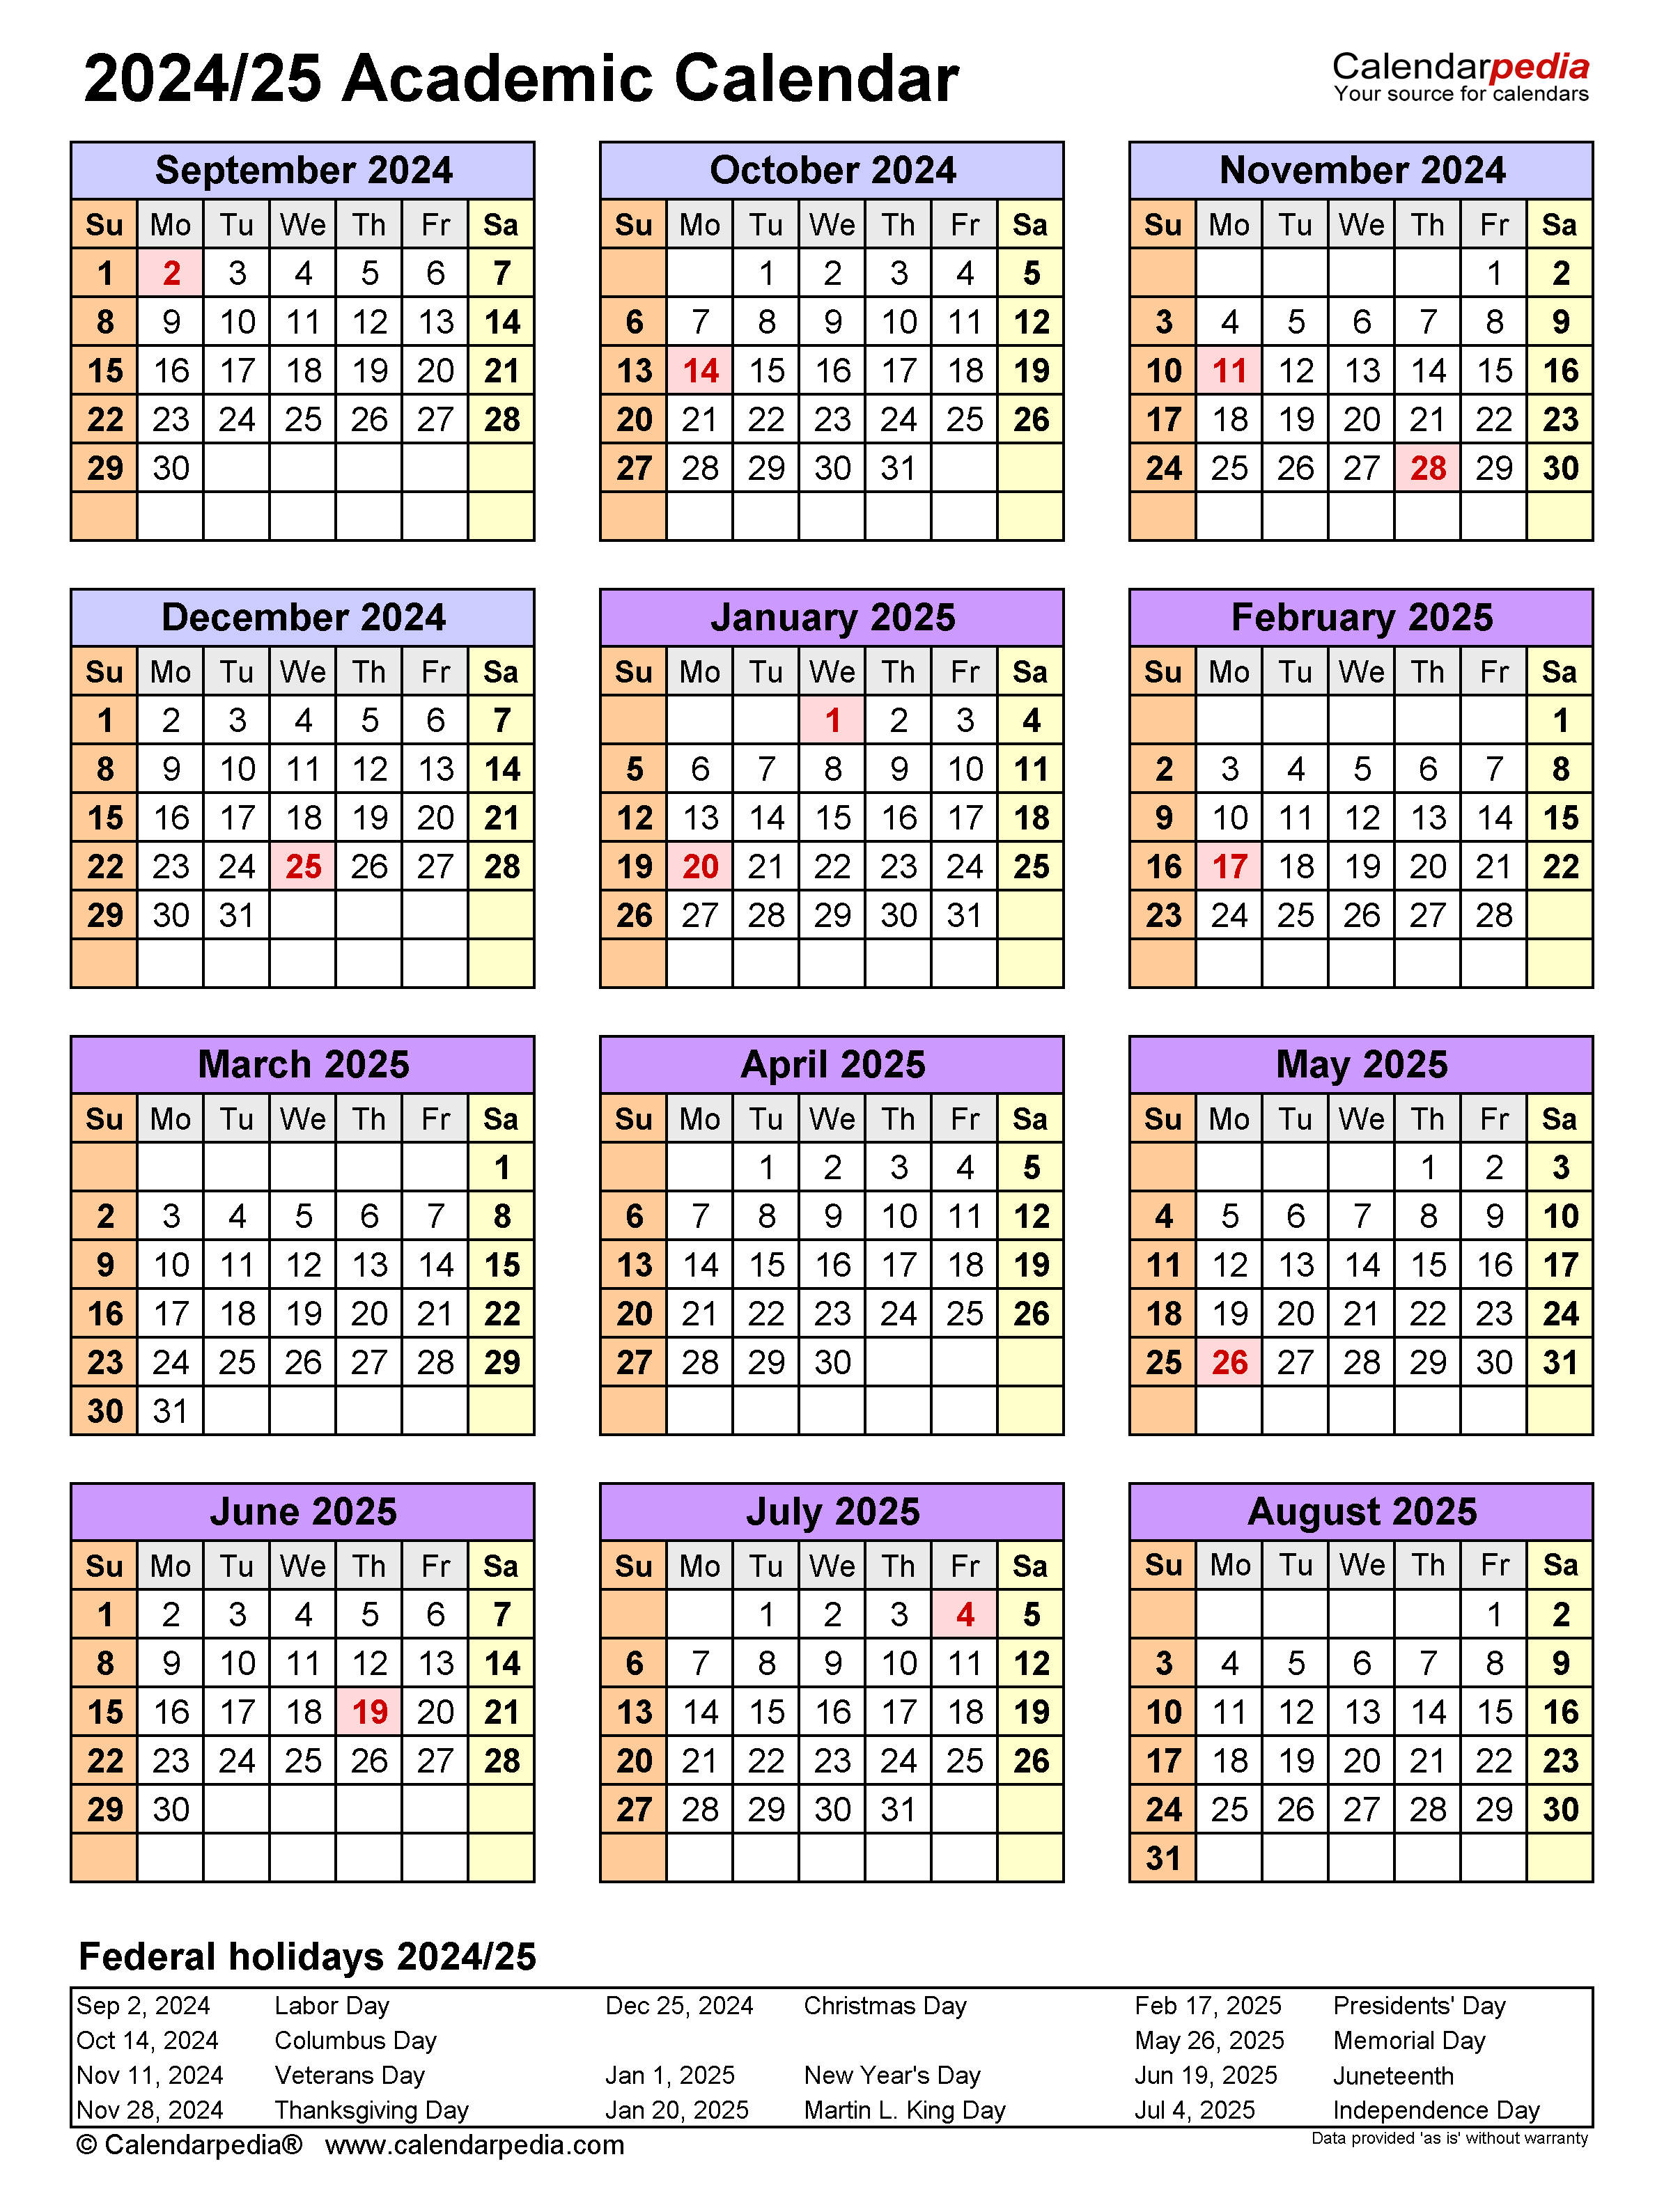 Spelman Academic Calendar 2024 - Free Printable Academic Event Calendar Year 2024-2025